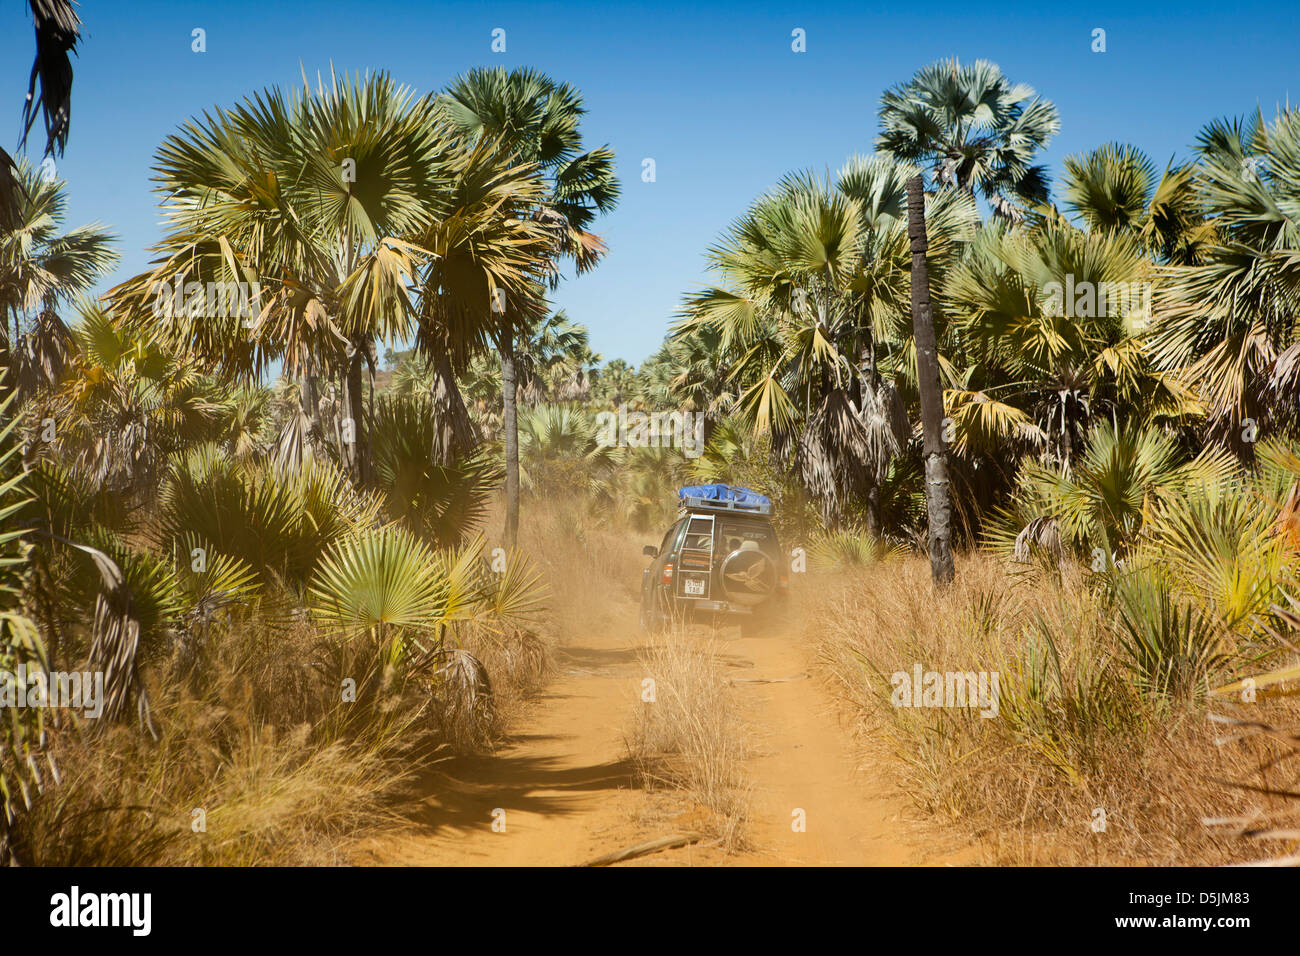 Madagascar, Mahajanga, four wheel drive vehicle driving along rough dusty road to Mariarano Stock Photo